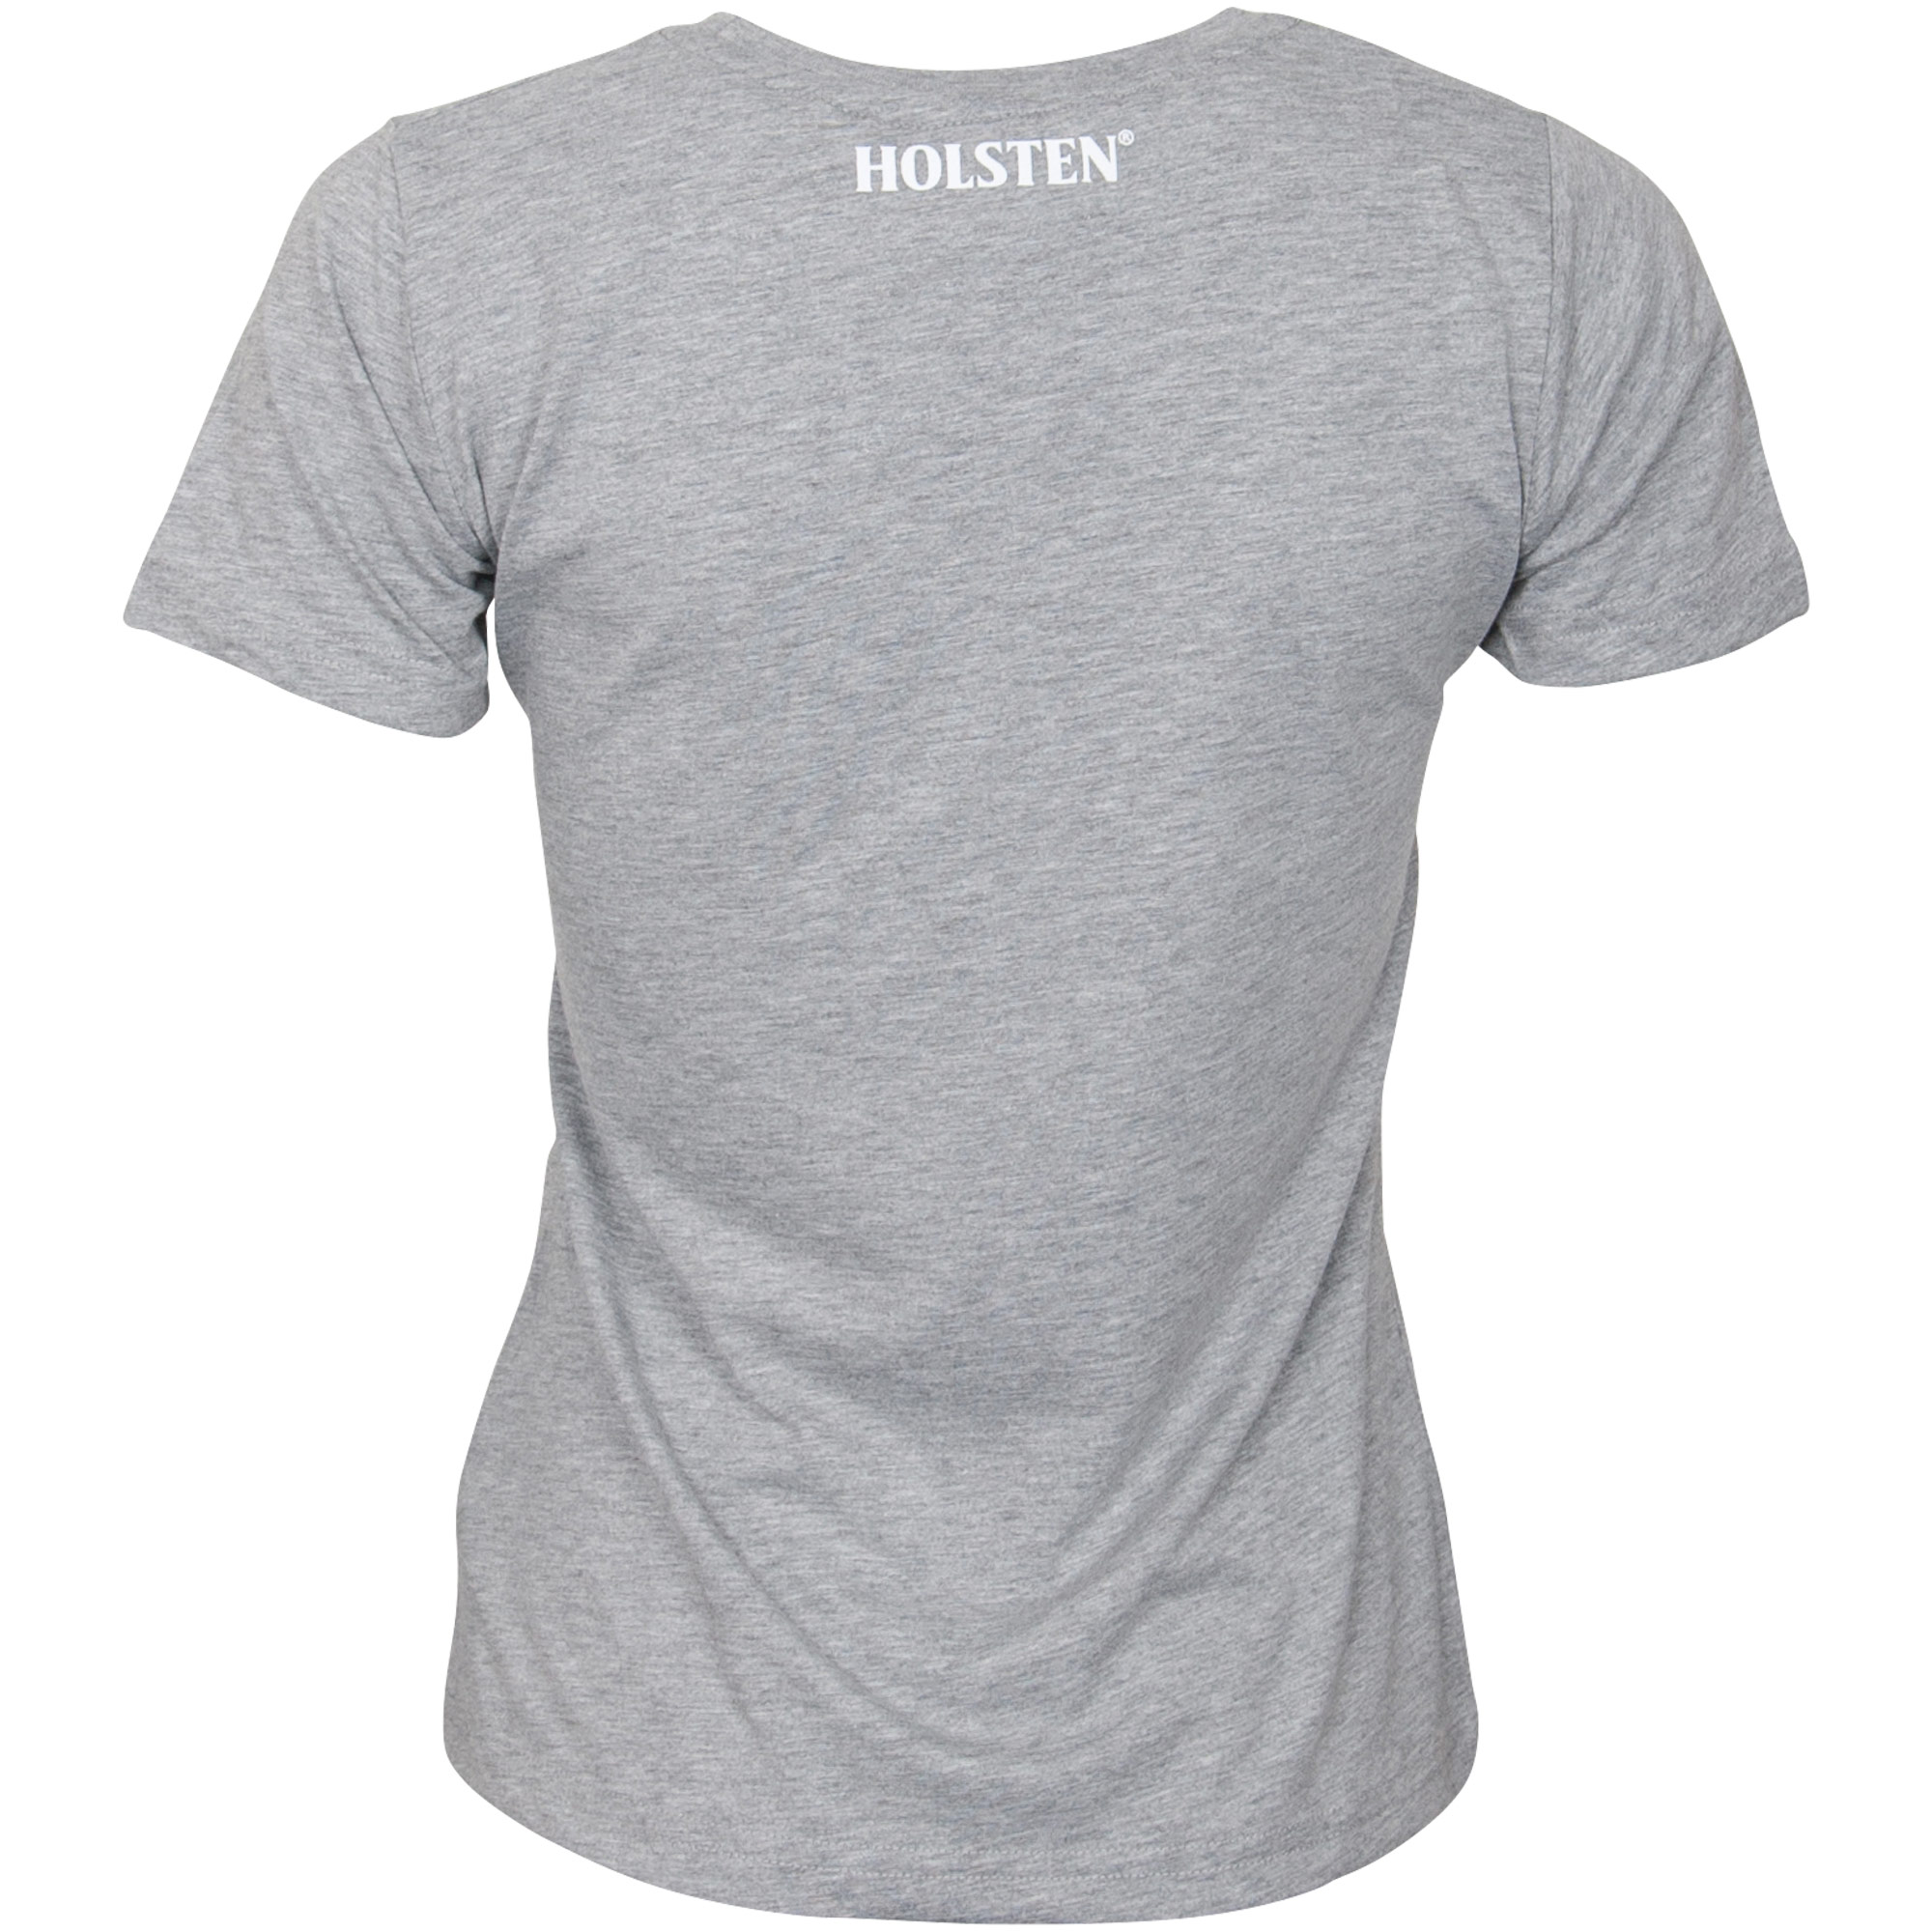 Holsten - Ladies T-Shirt Ritter - grey